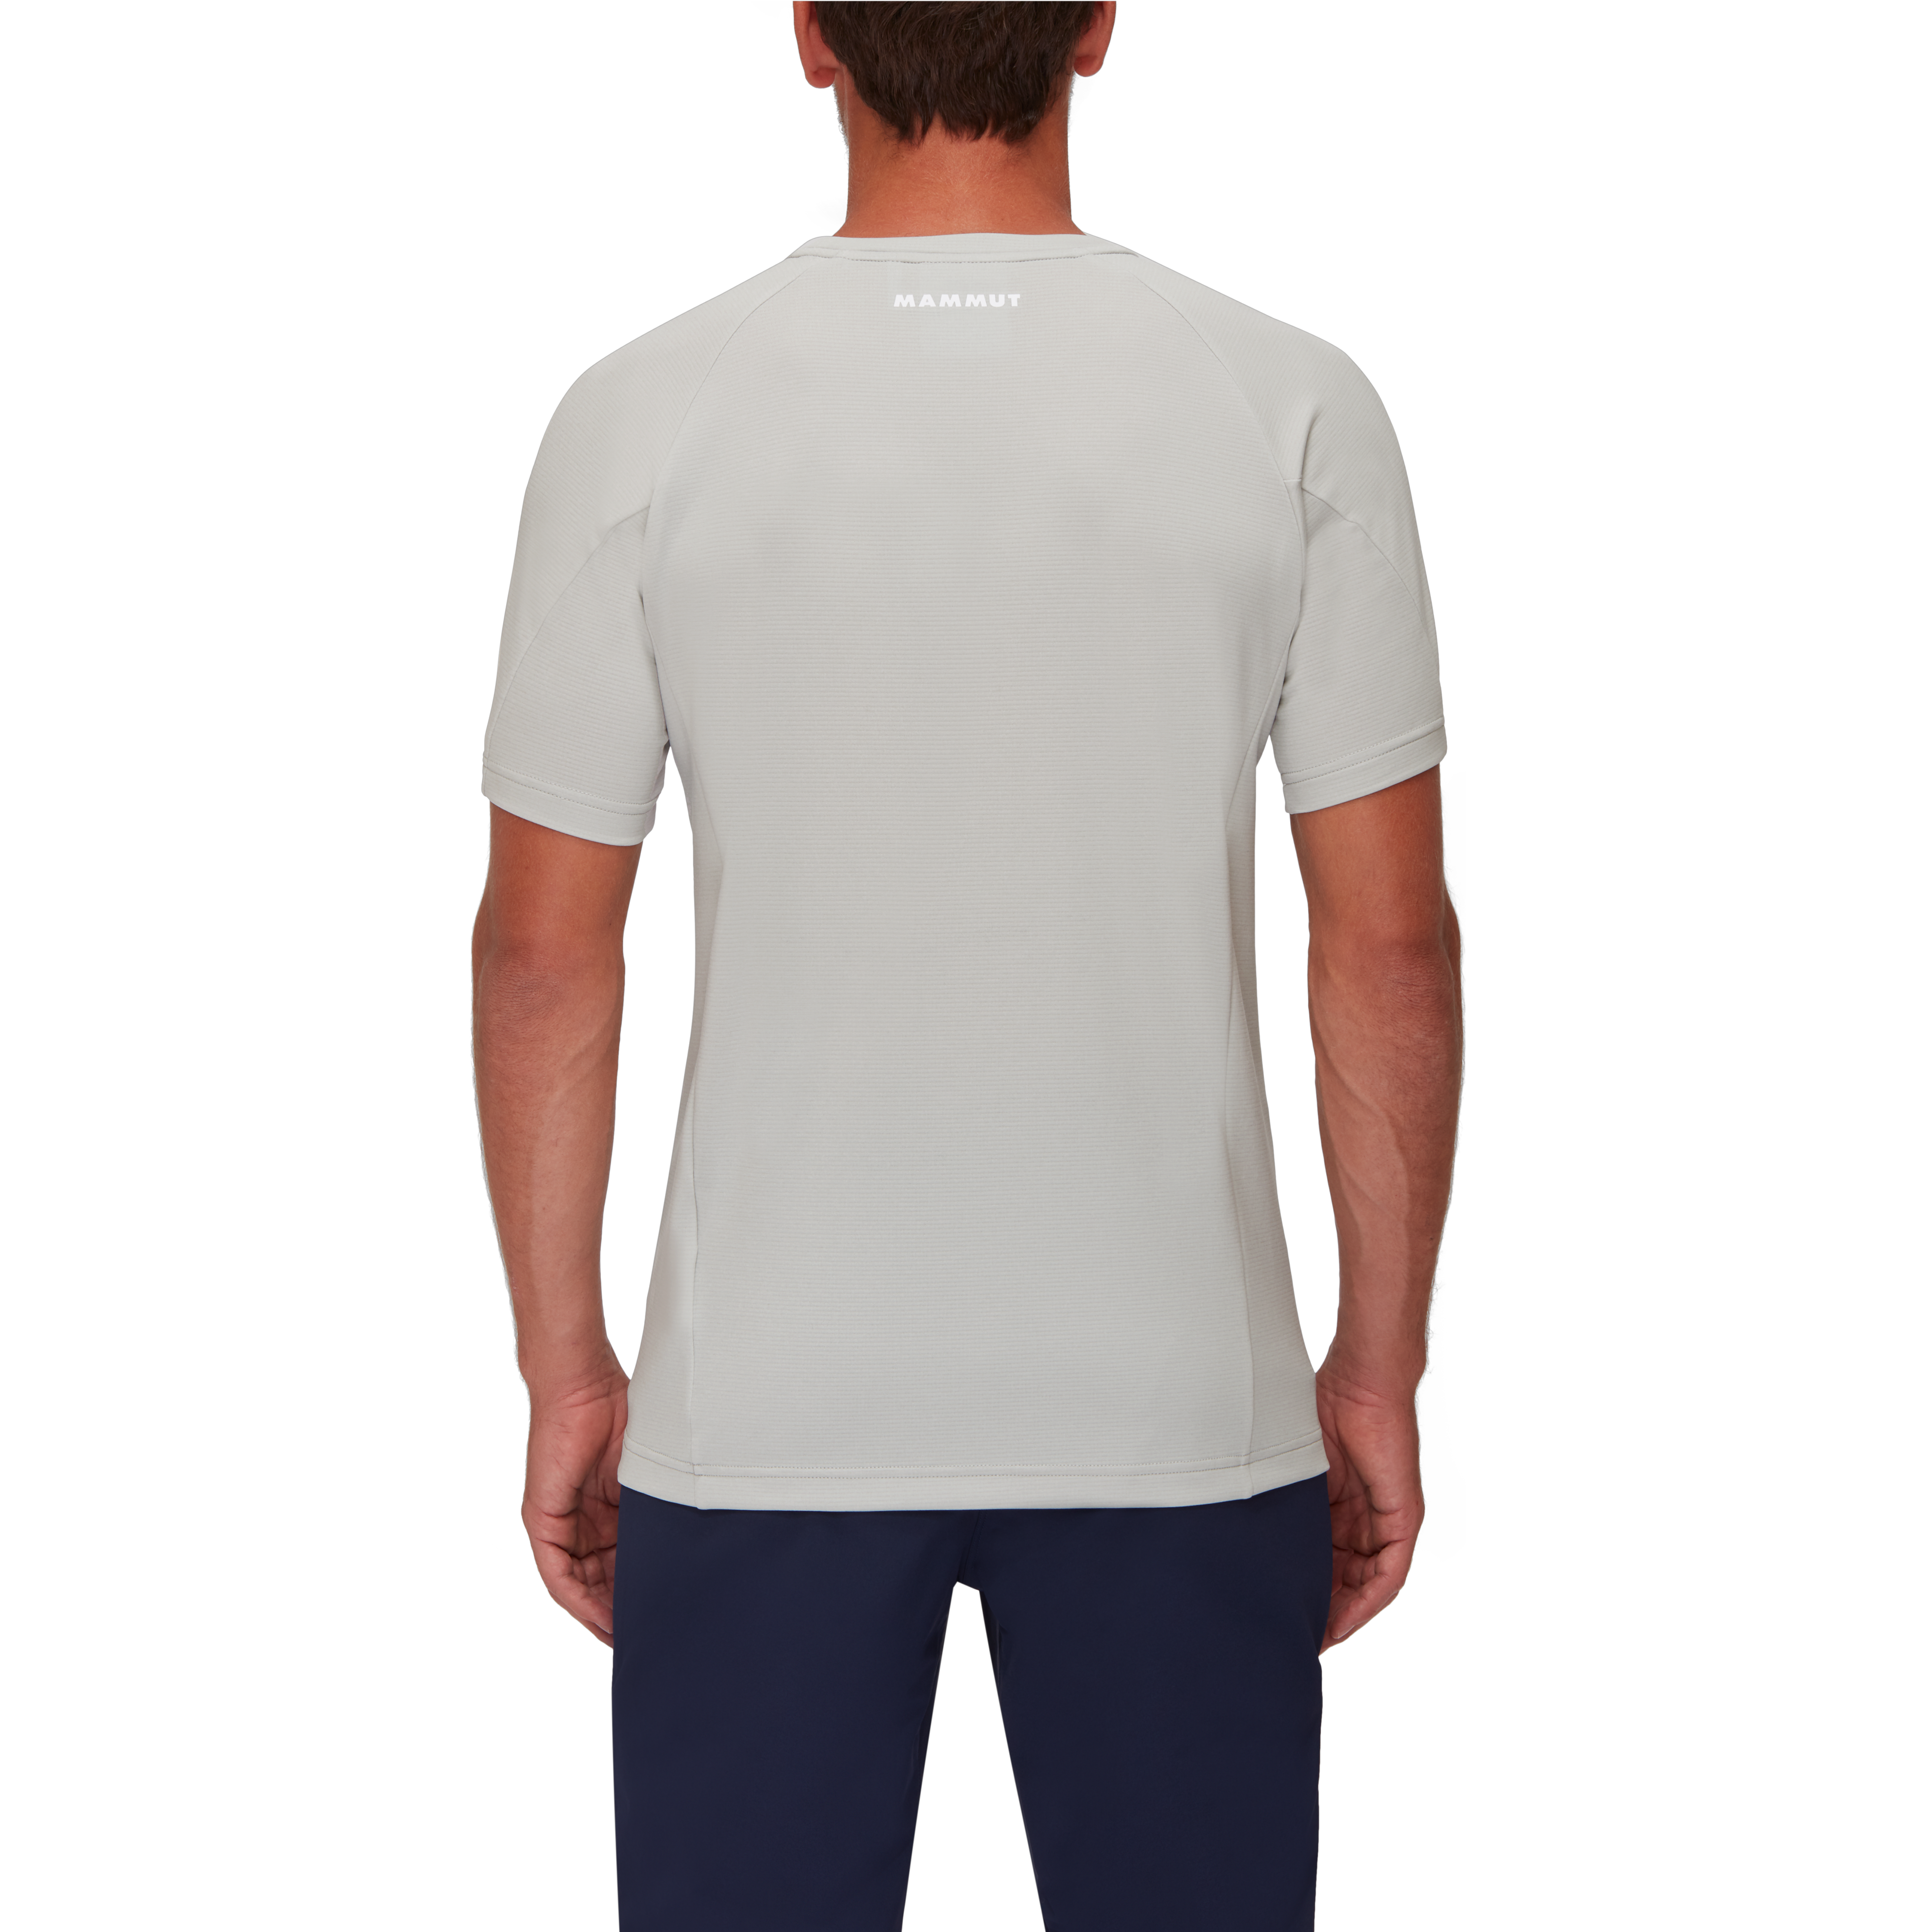 Aegility FL T-Shirt Men product image